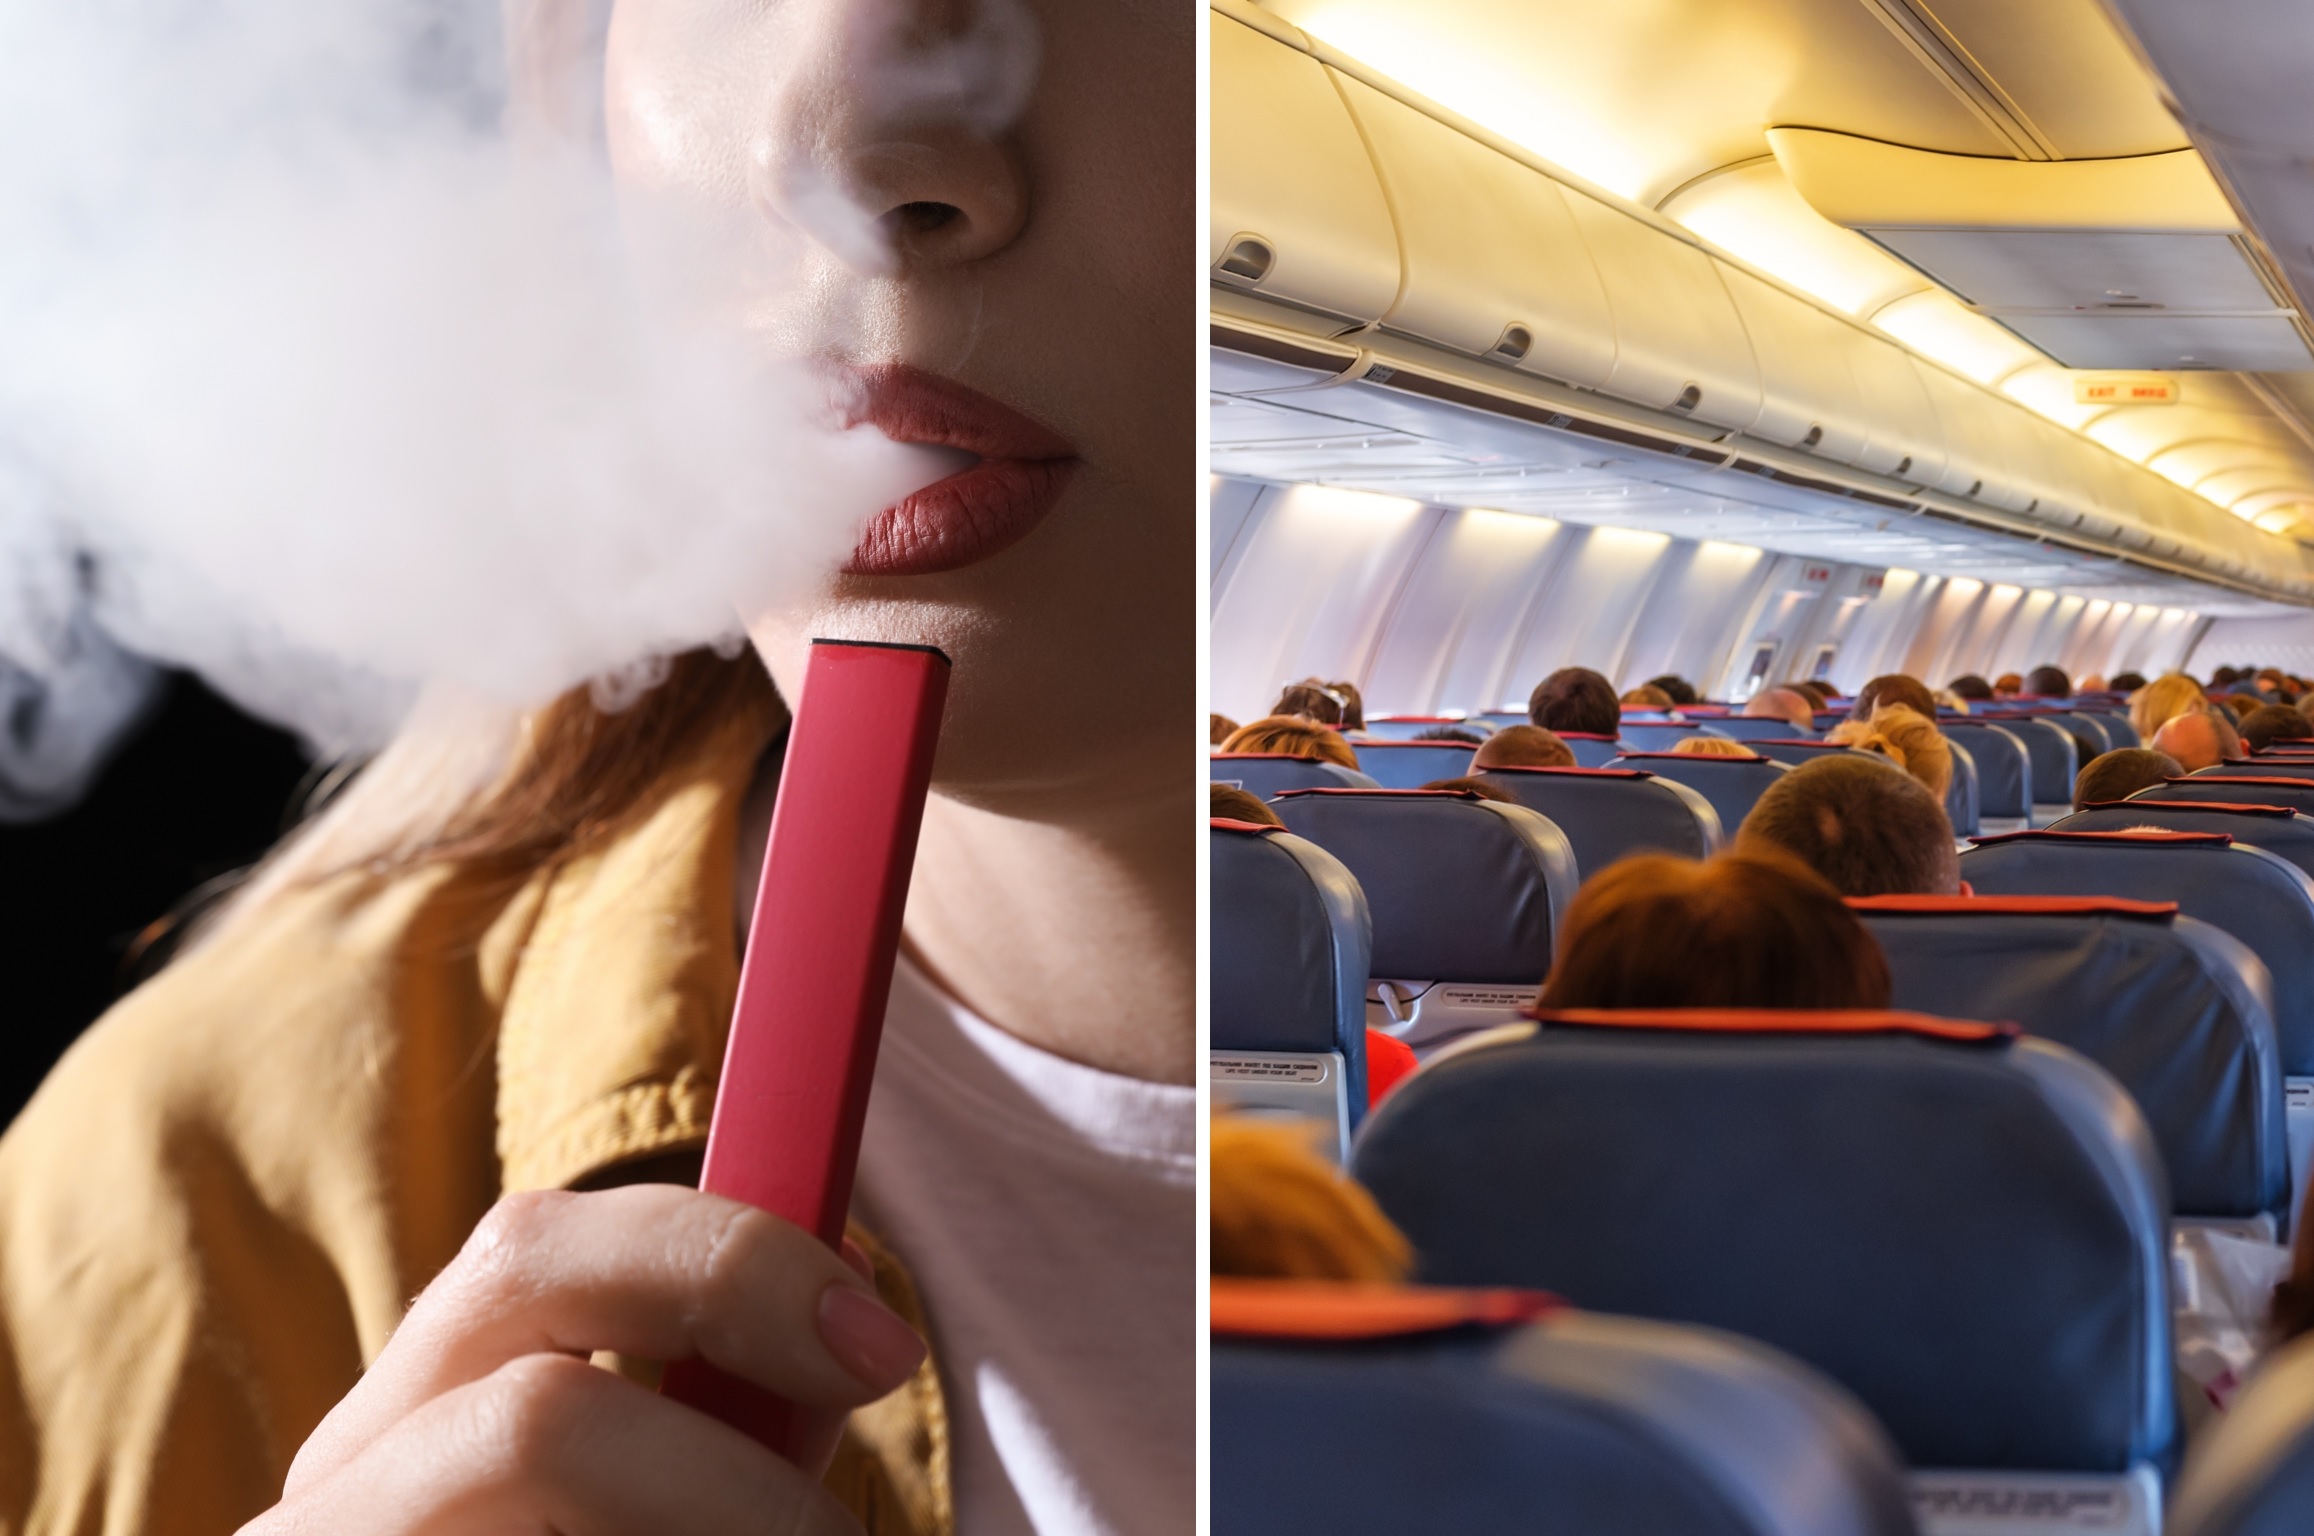 can airplane smoke detectors detect vape